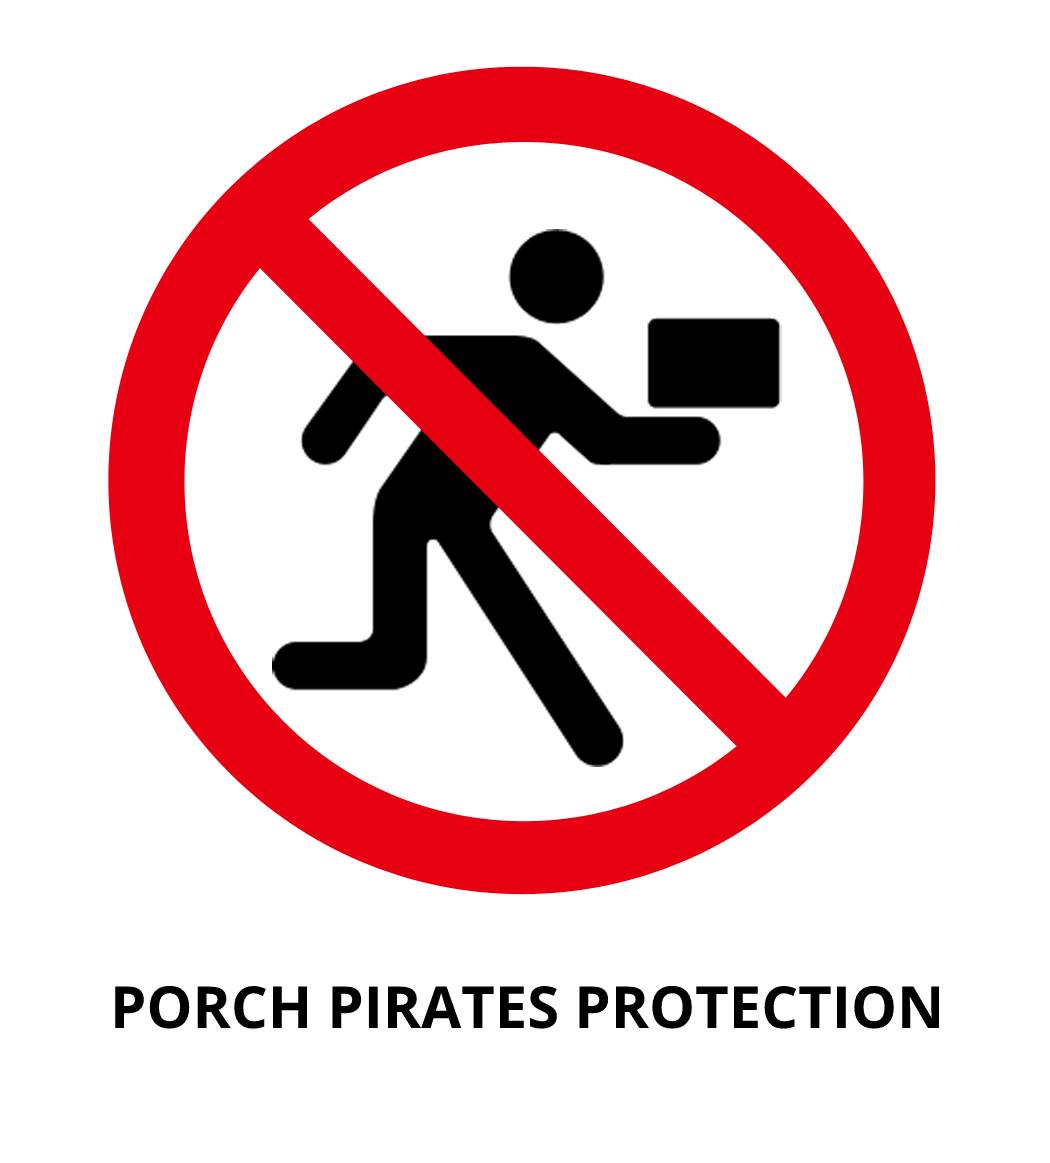 Porch Pirates Protection (rr)